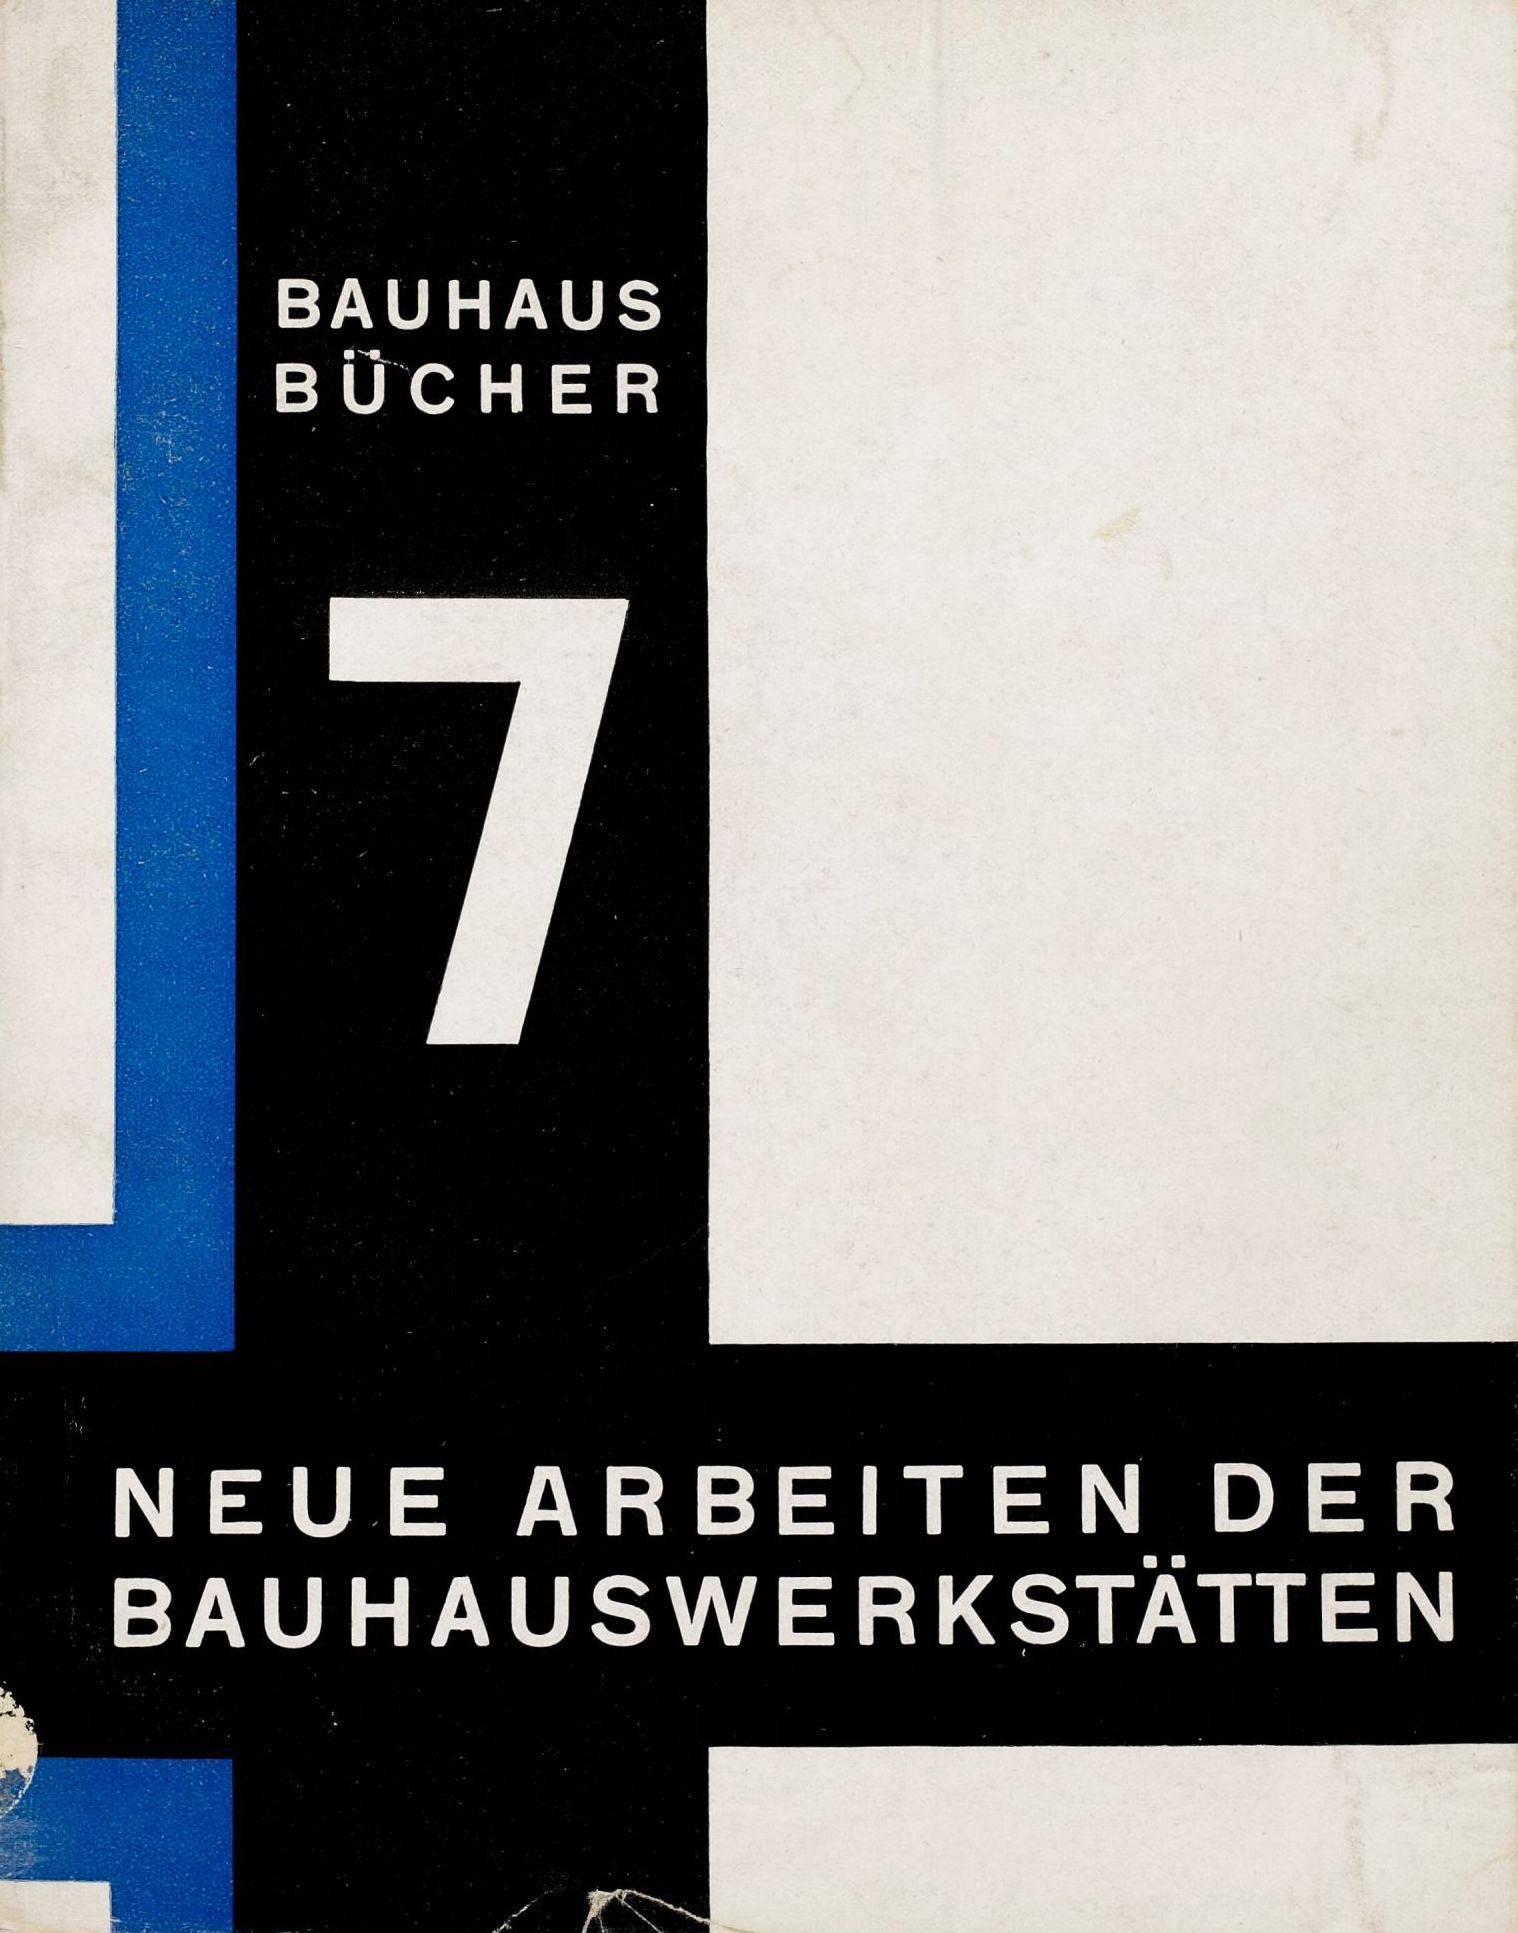 Neue Arbeiten der Bauhauswerkstätten. — München : Albert Langen Verlag, 1925. — Bauhausbücher 7